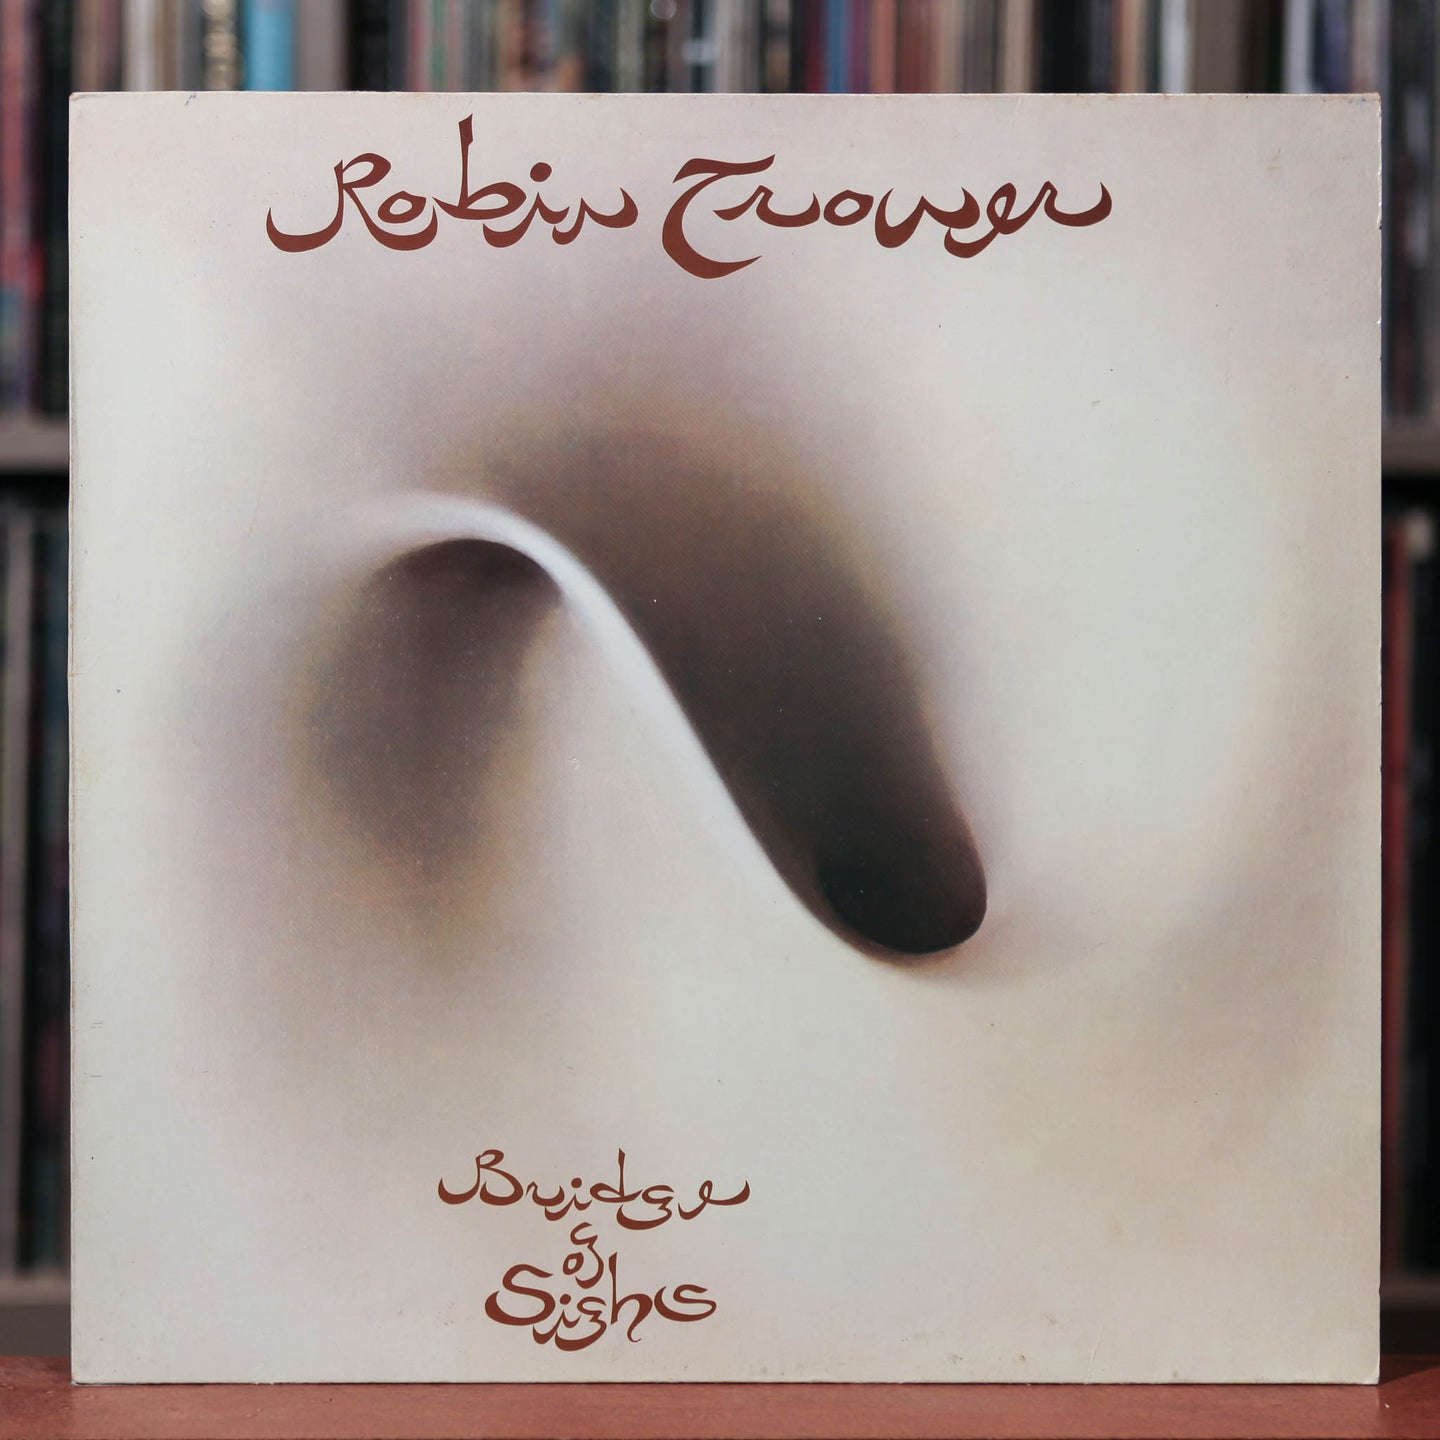 Robin Trower - Bridge Of Sighs - 1974 Chrysalis German GEMA, EX/VG+